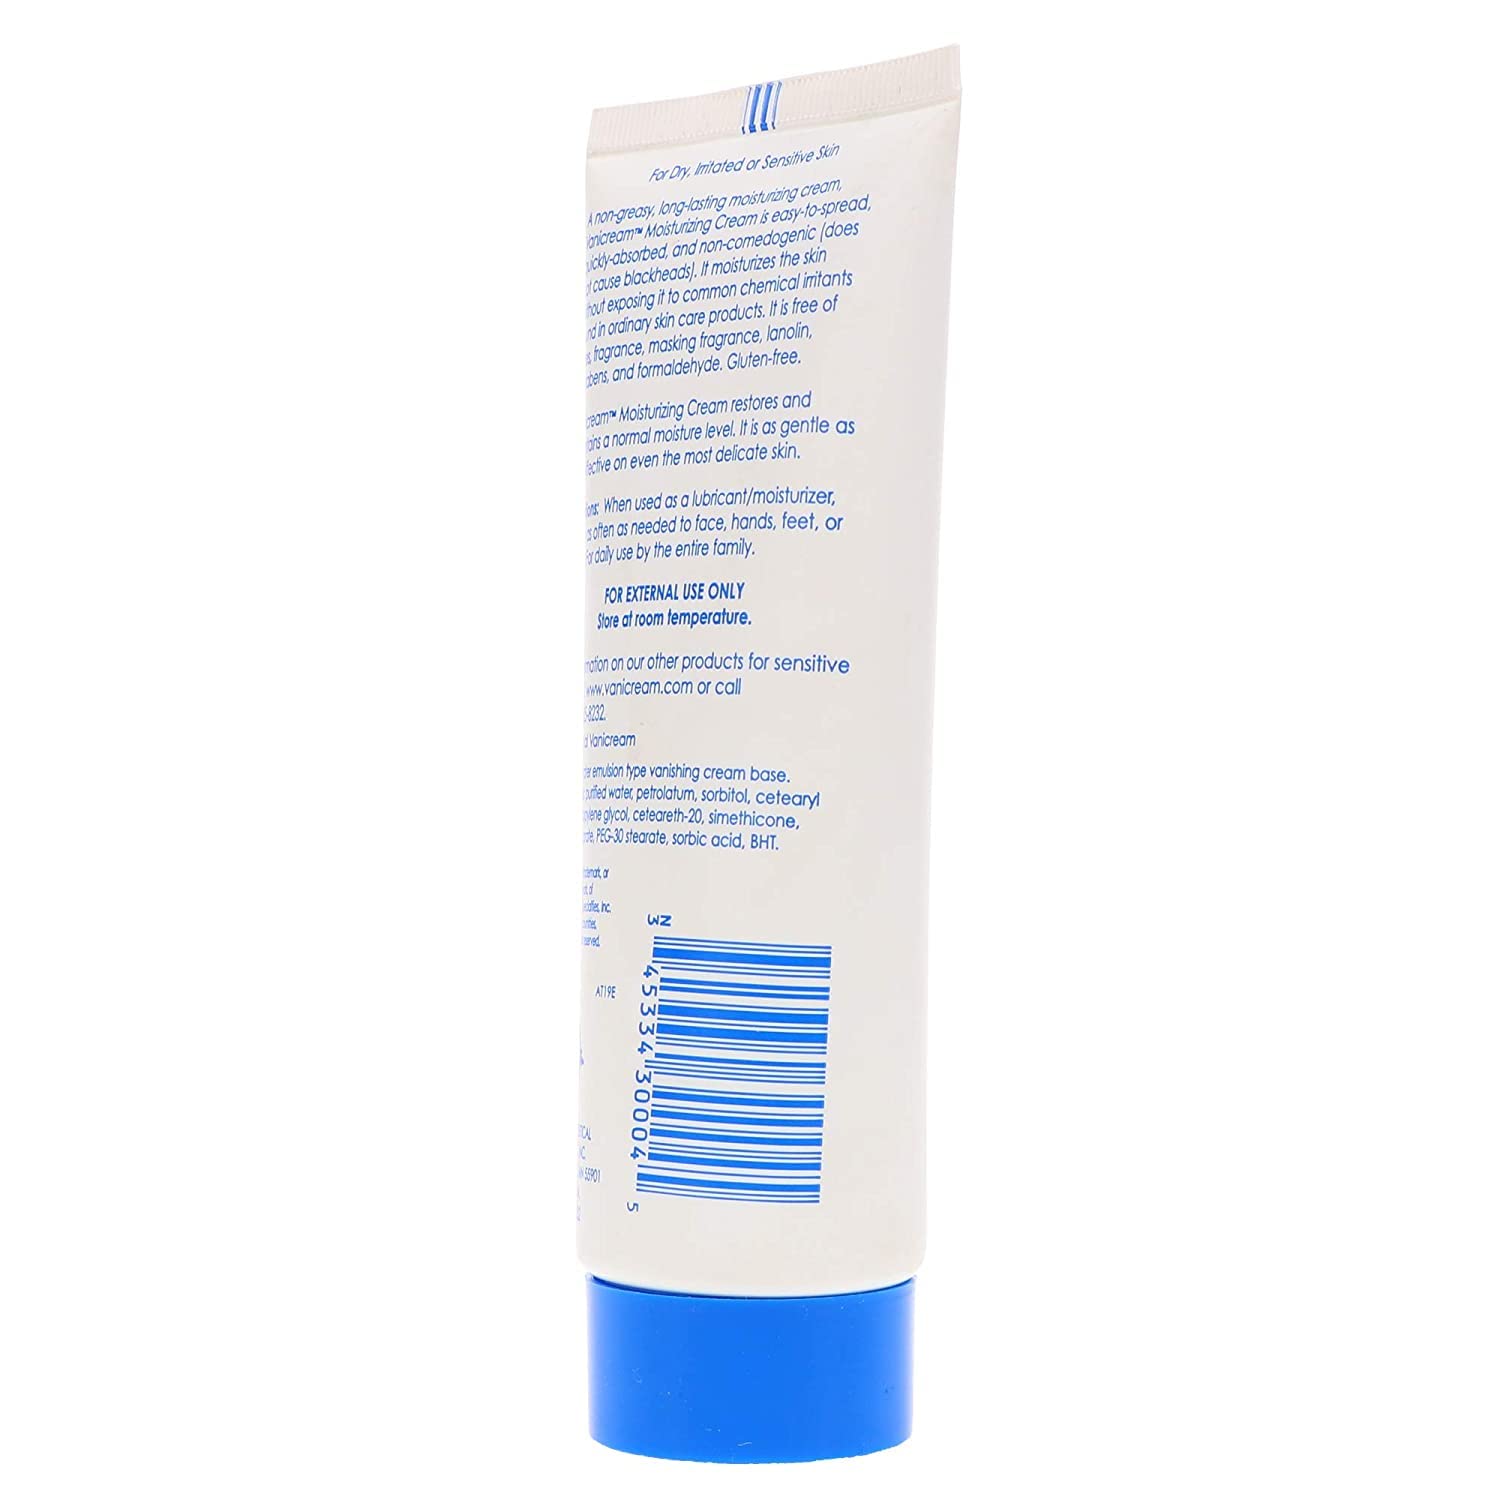 Vanicream Moisturizing Skin Cream for Sensitive Skin 4 oz (Pack of 5)5